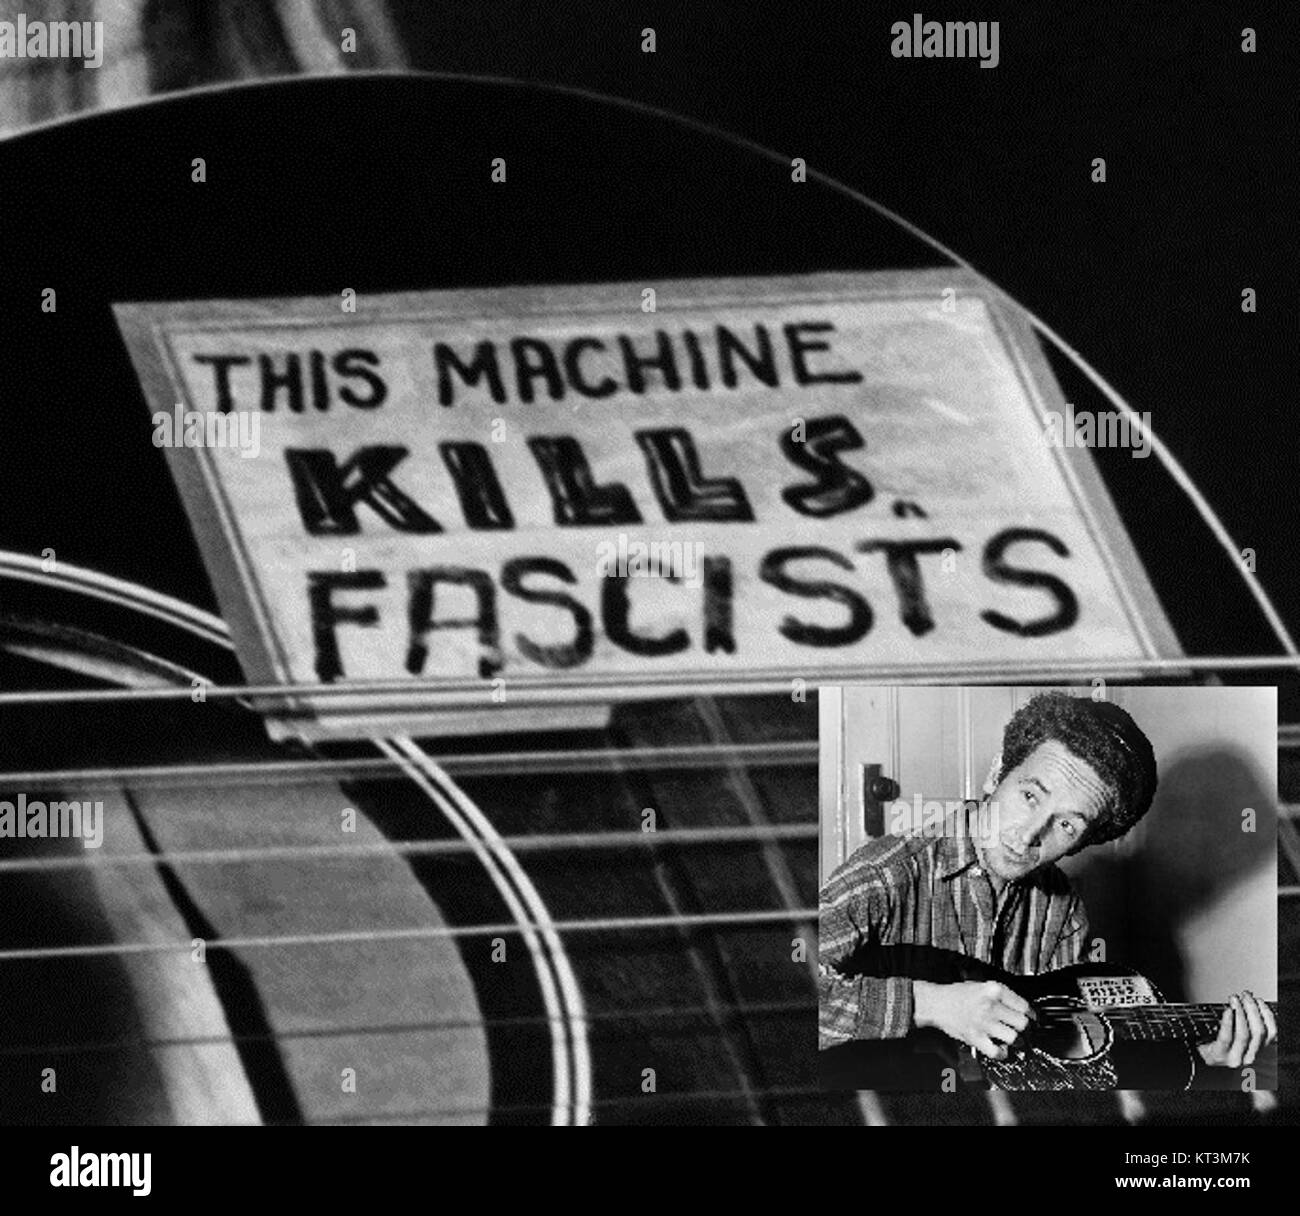 Guthrie guitar this machine kills fascists Stock Photo - Alamy